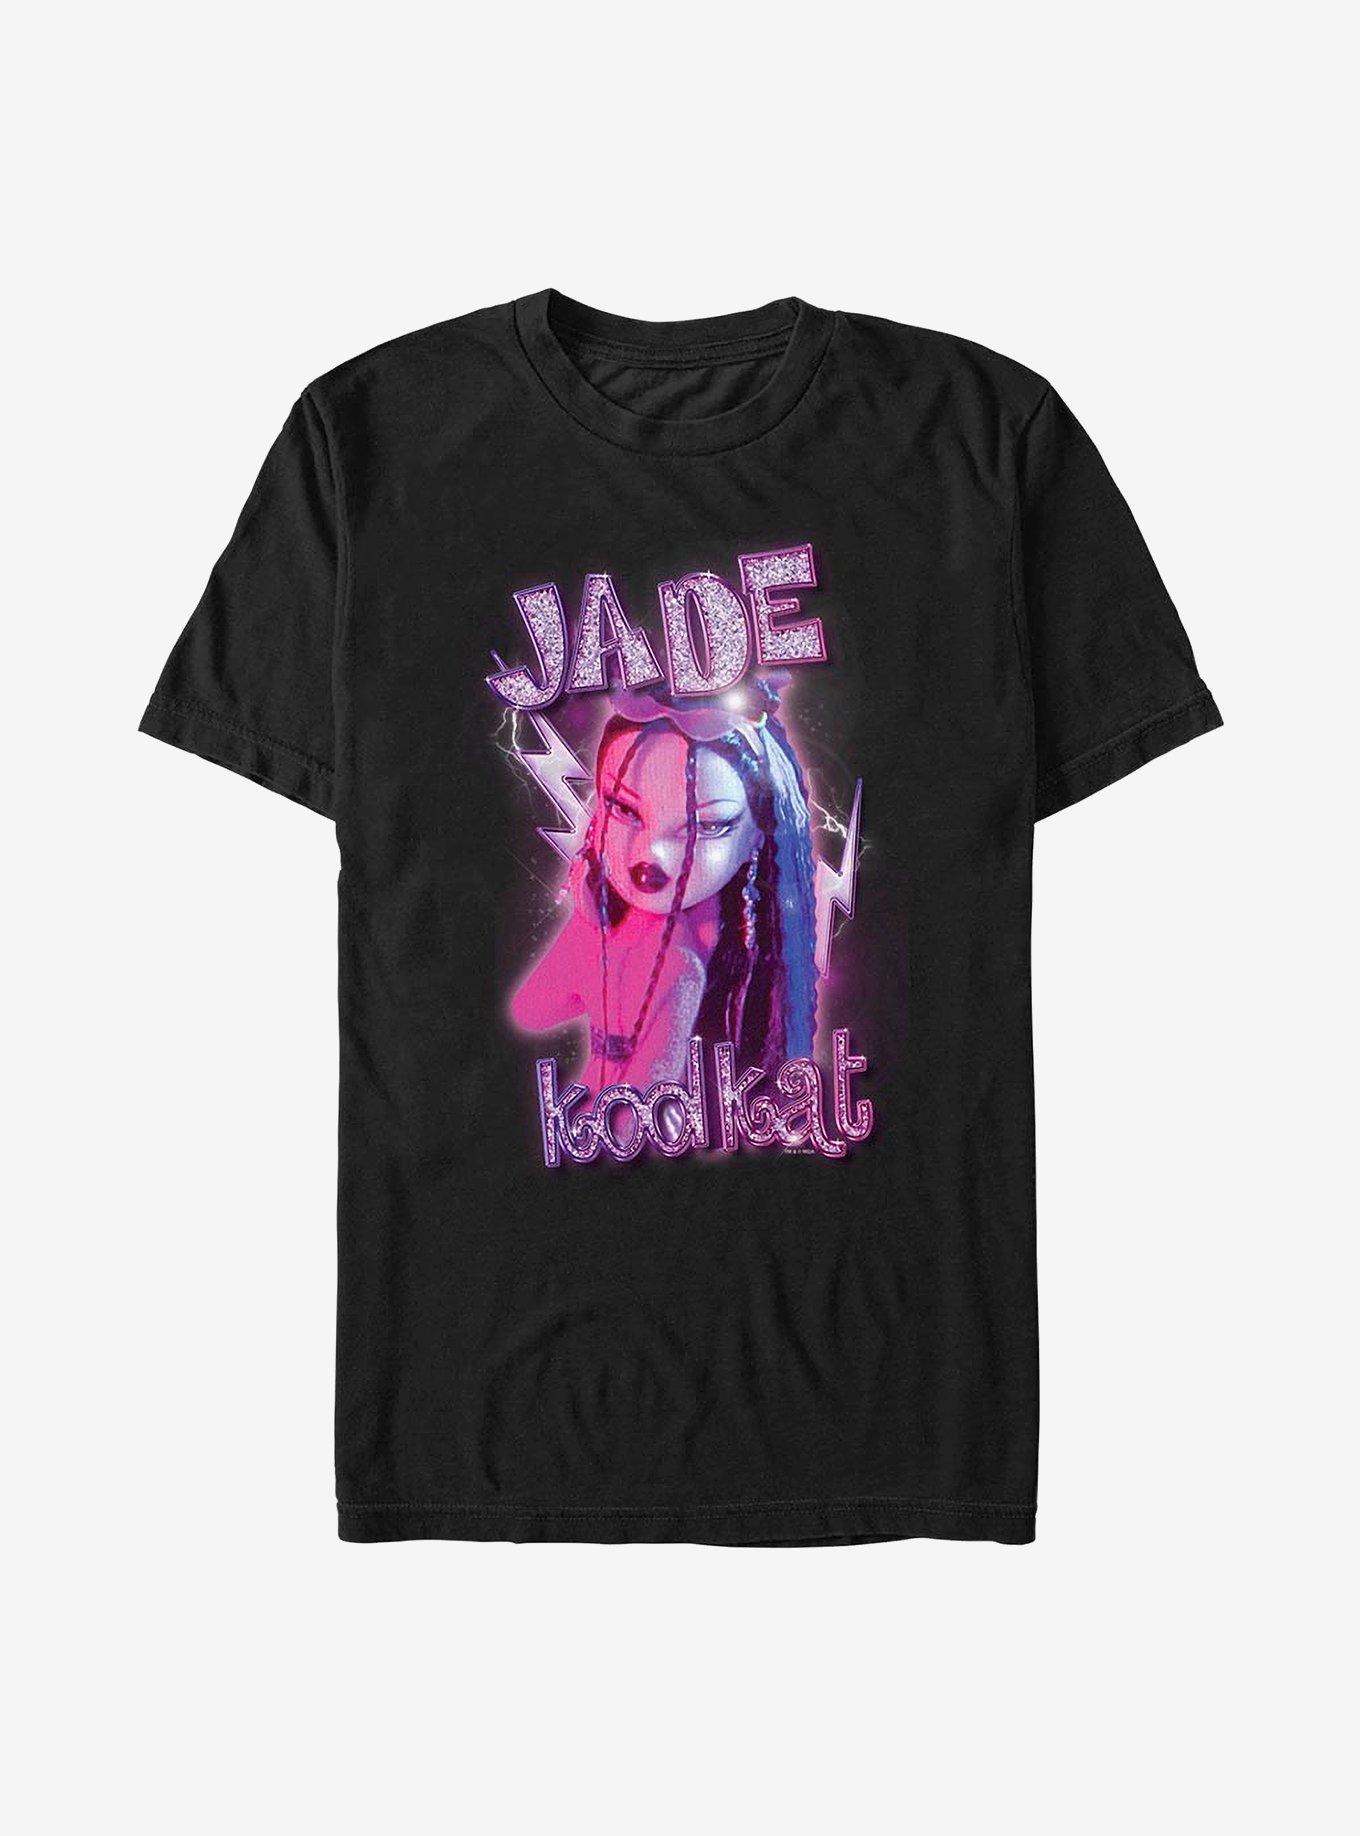 Bratz Kool Kat Jade T-Shirt